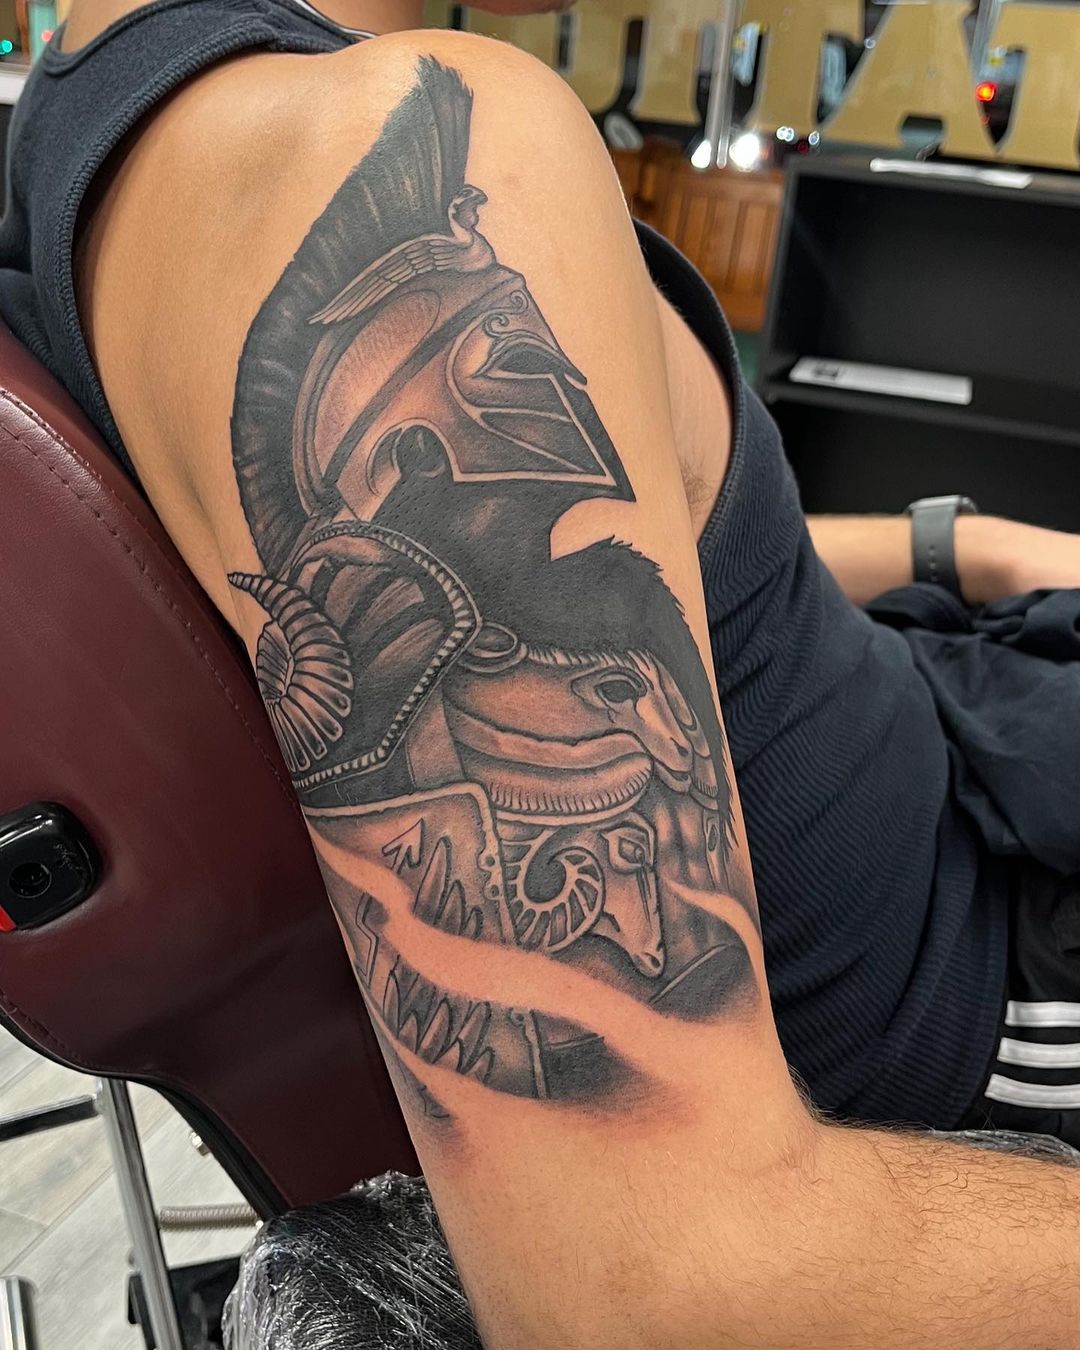 Spartan Tattoo Design Near The Shoulder